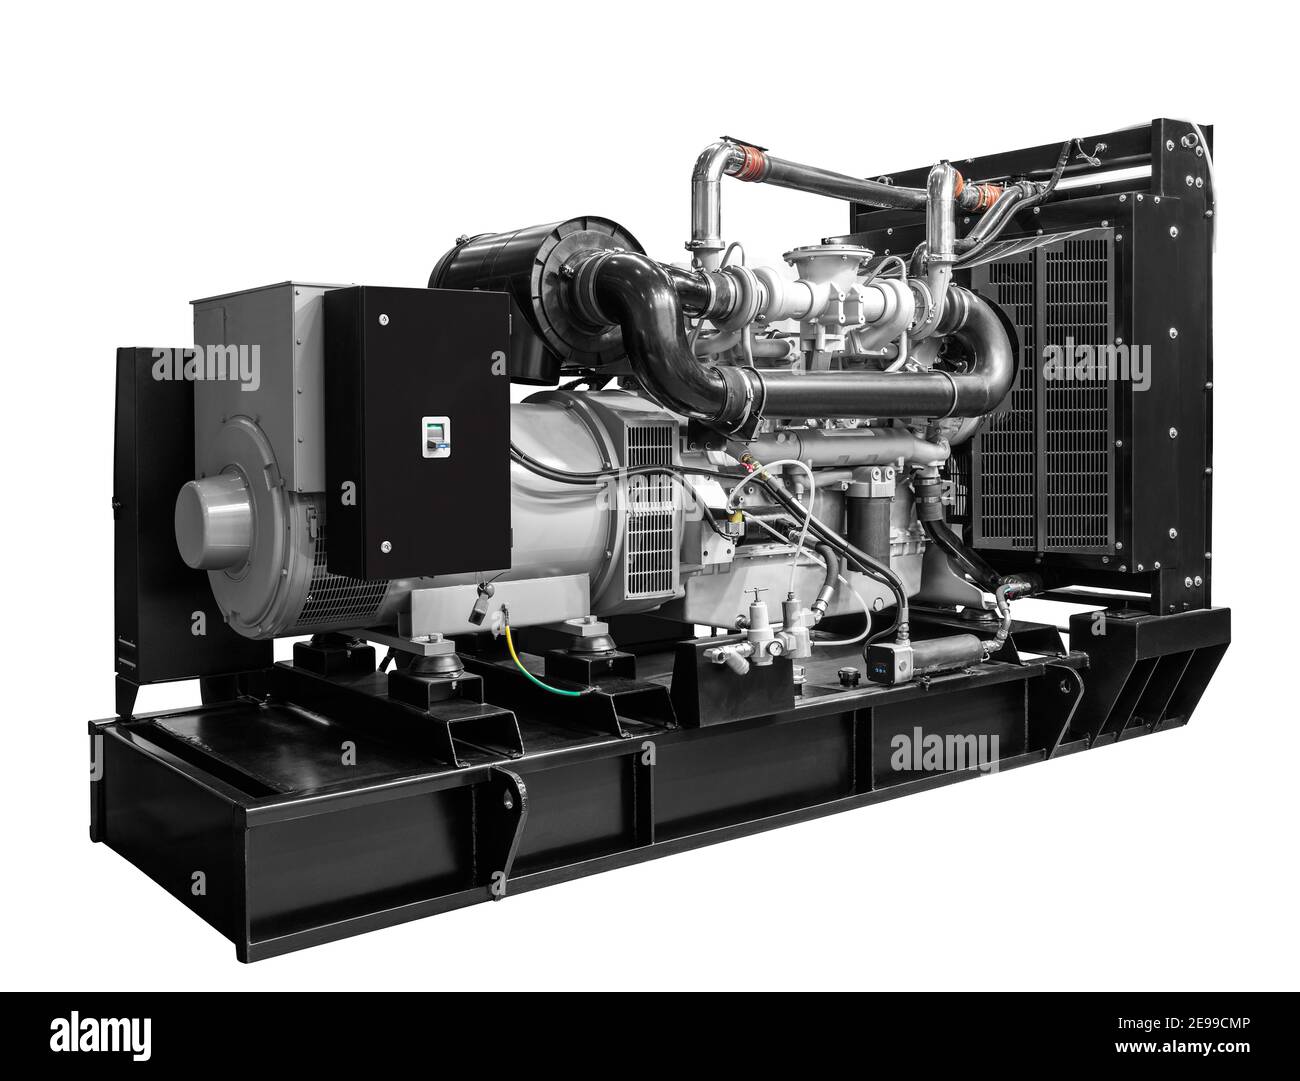 Motor generator -Fotos und -Bildmaterial in hoher Auflösung – Alamy